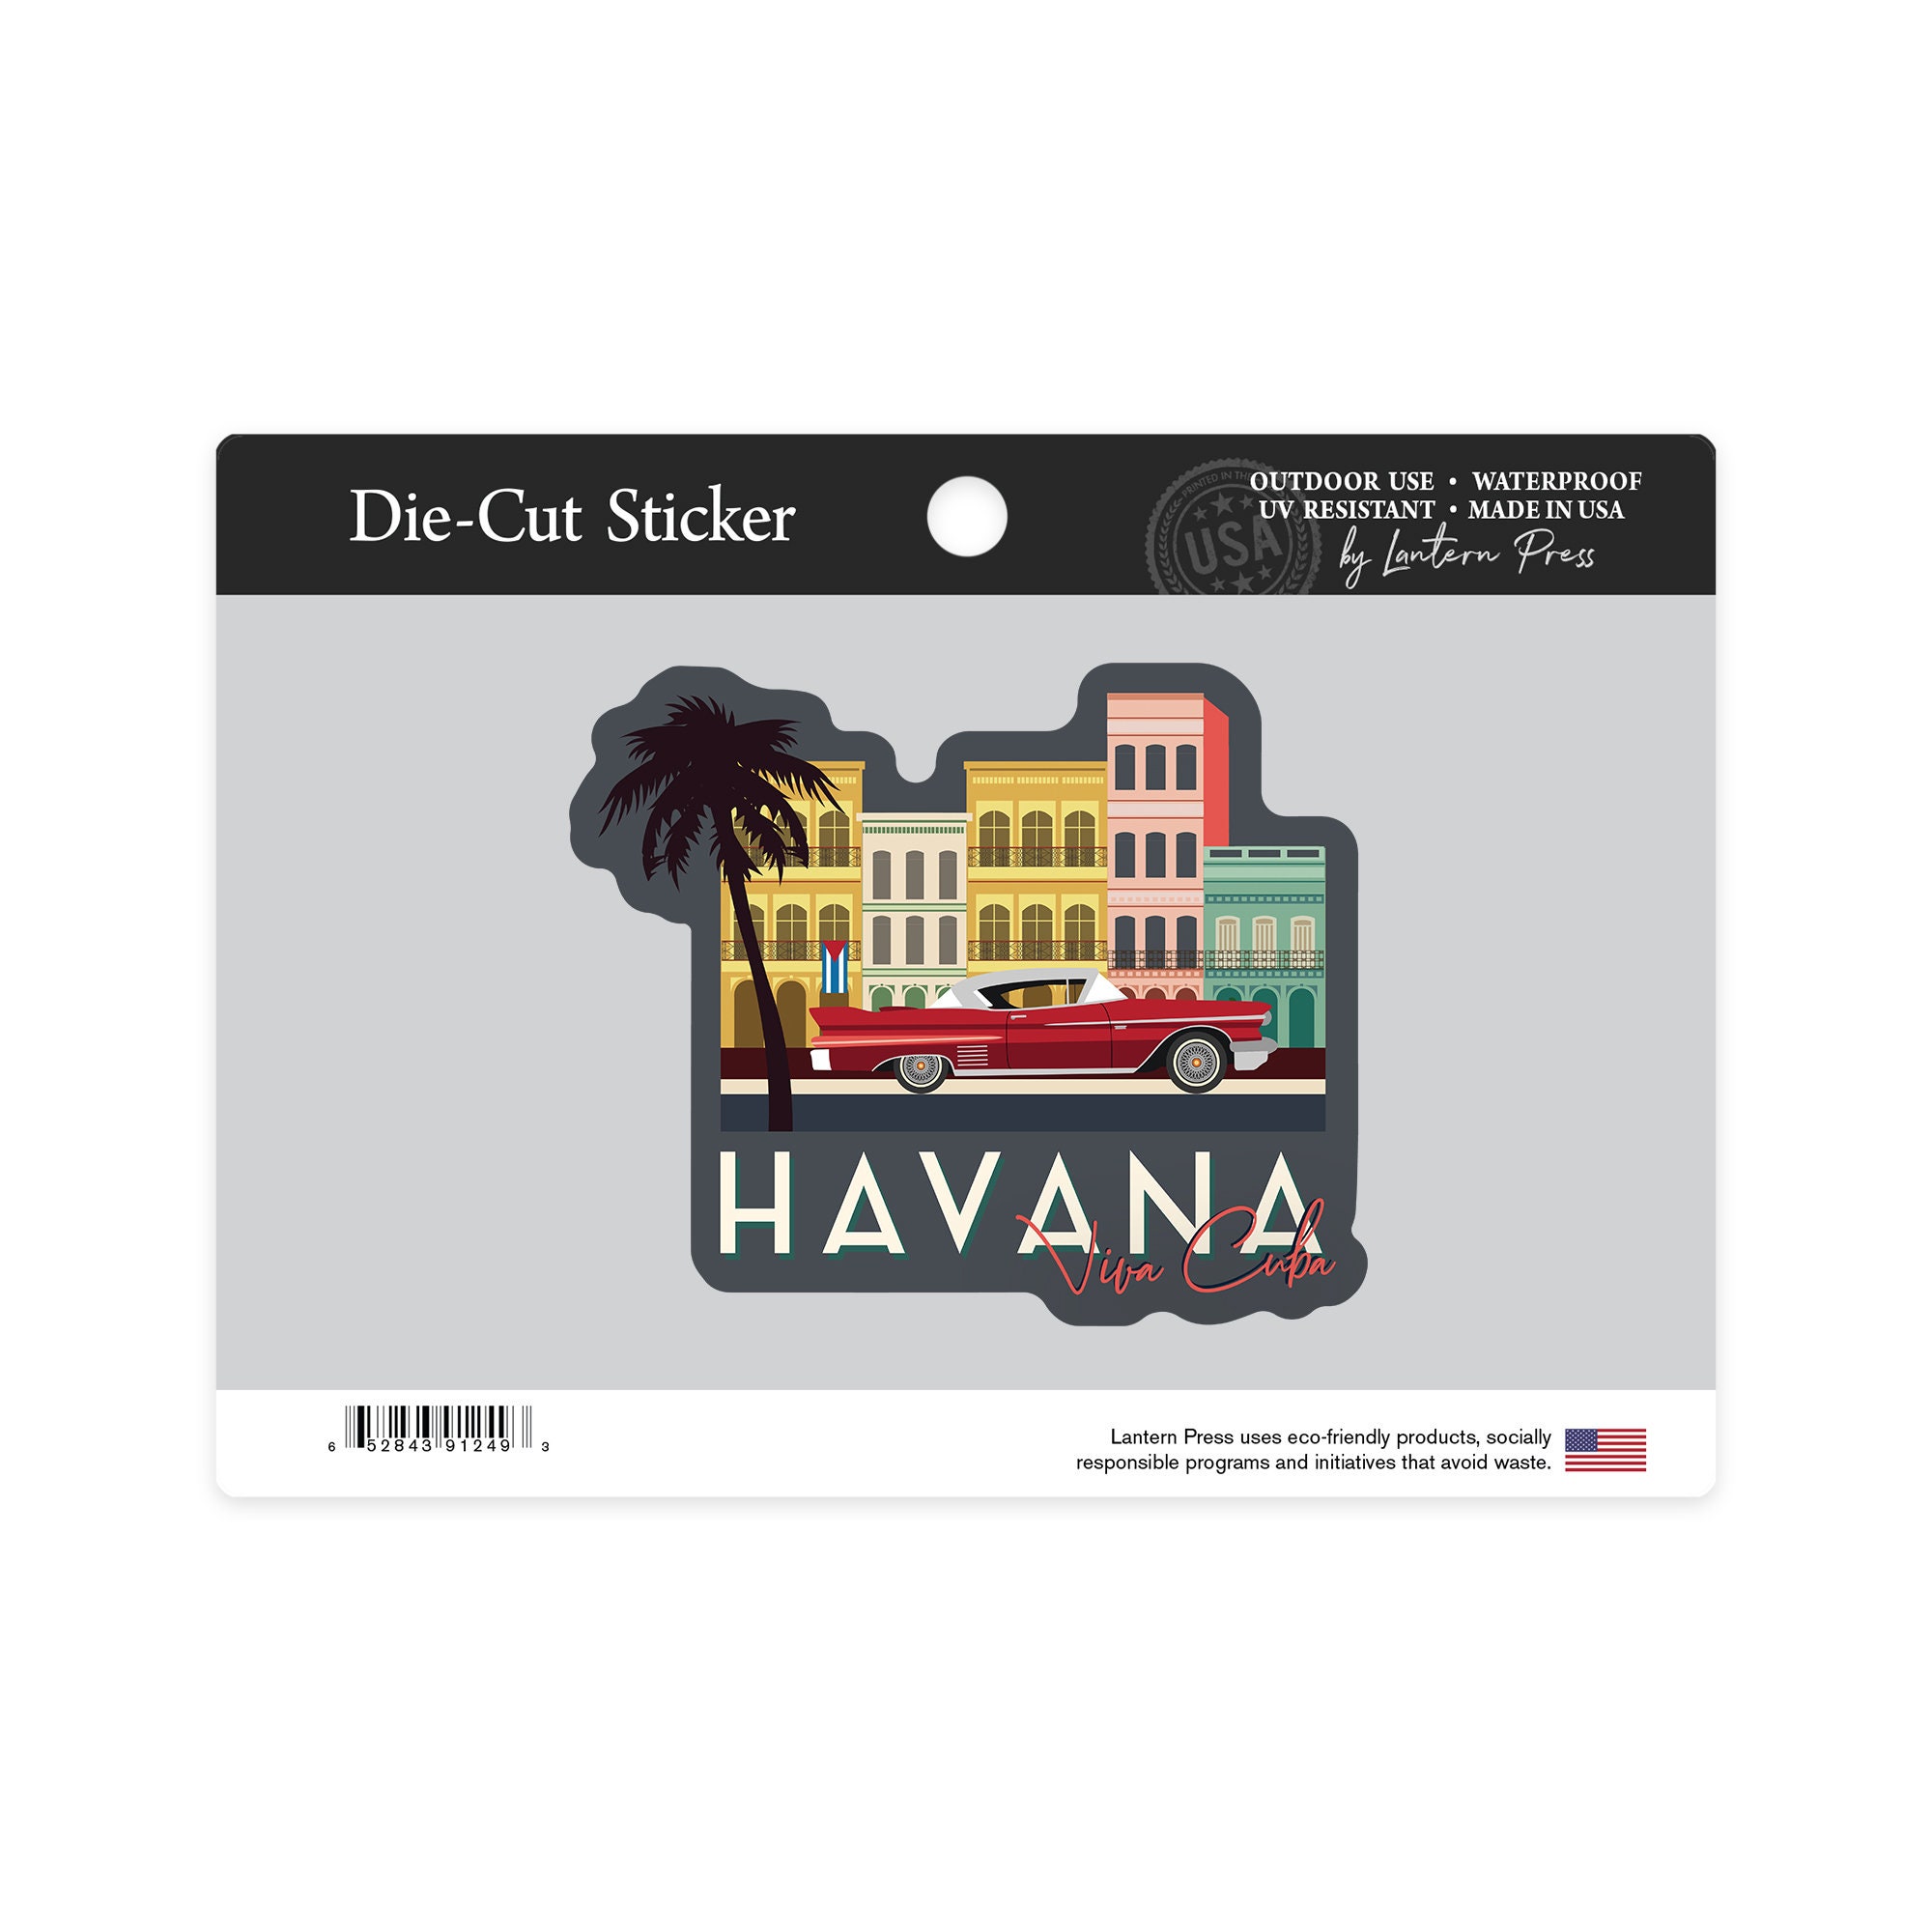 Bandera de Guanabacoa, Cuba STICKER Vinyl Die-Cut Decal – The